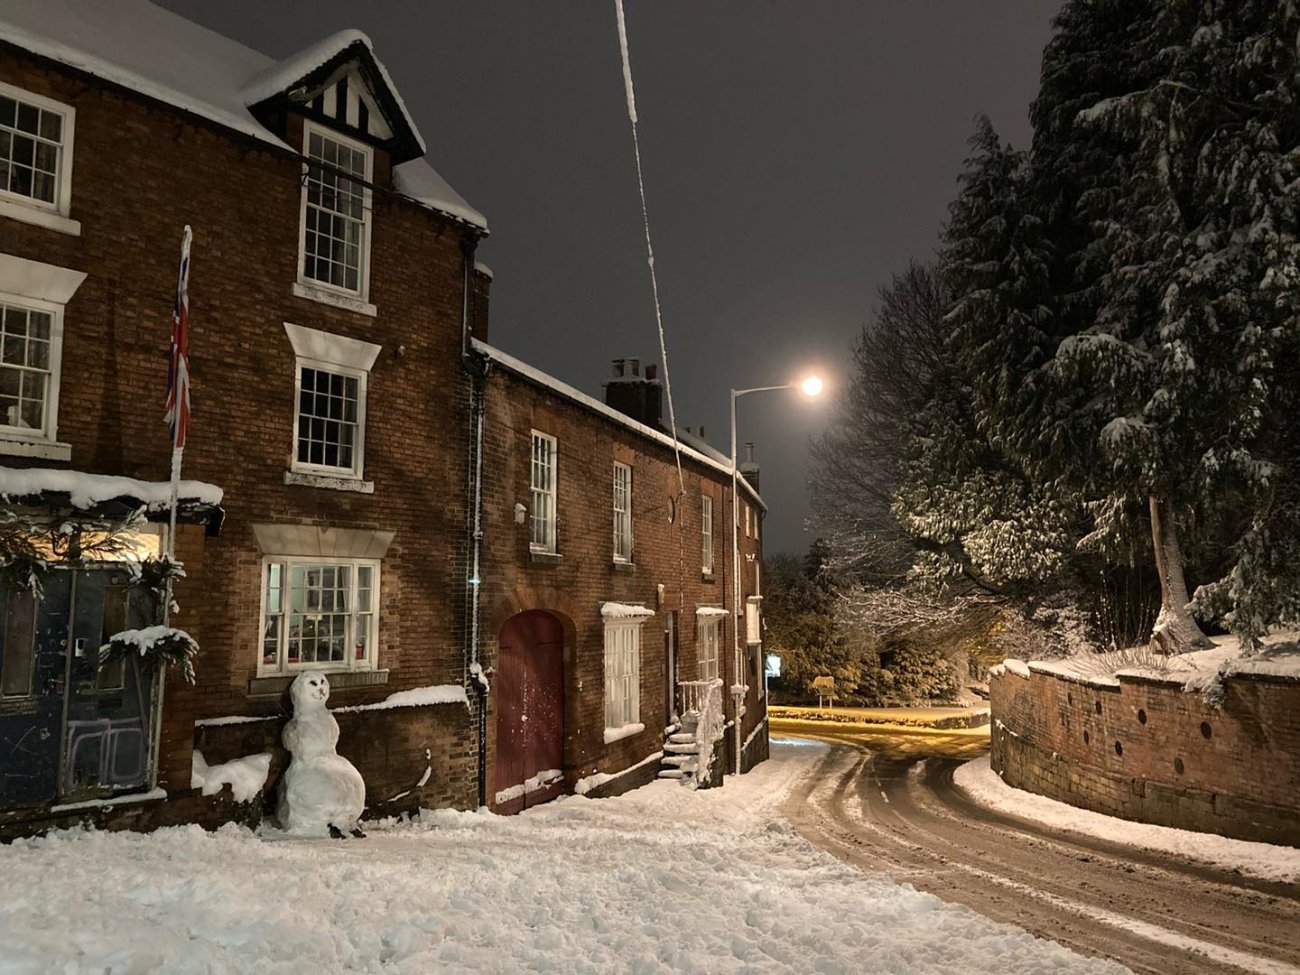 Photograph of Snowy Spondon Nights - Church Hill